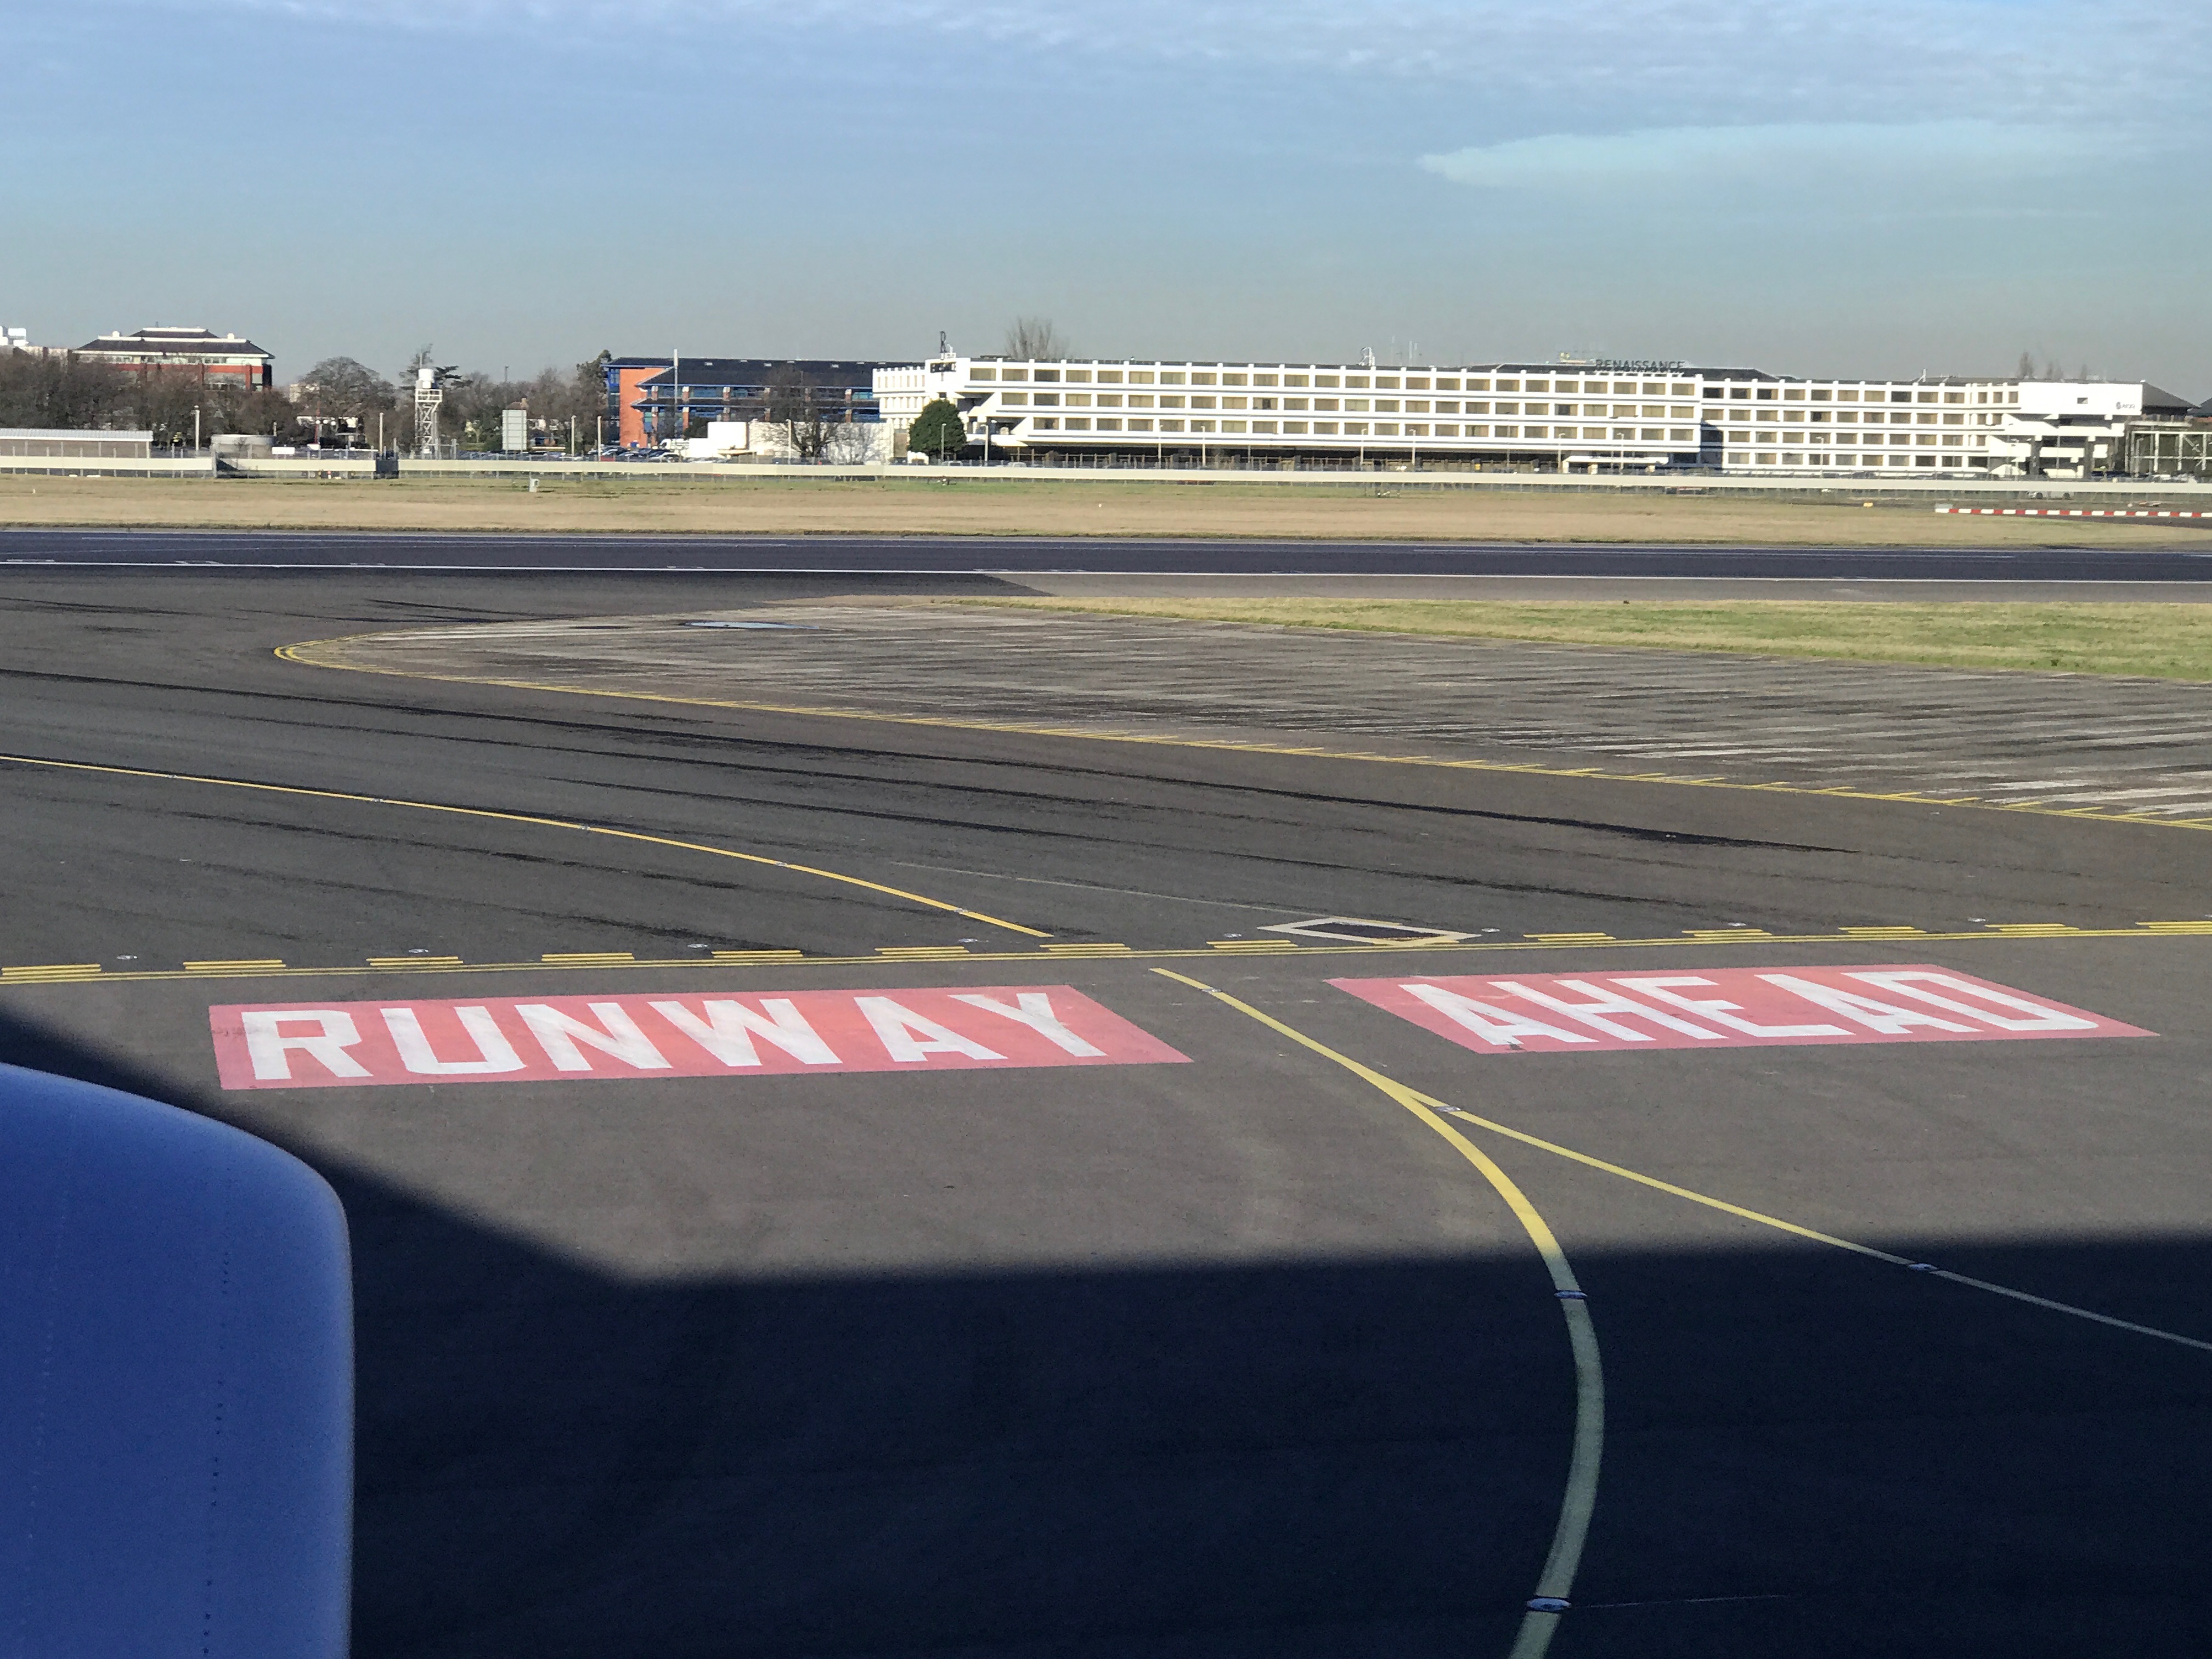 a runway and runway sign on a runway